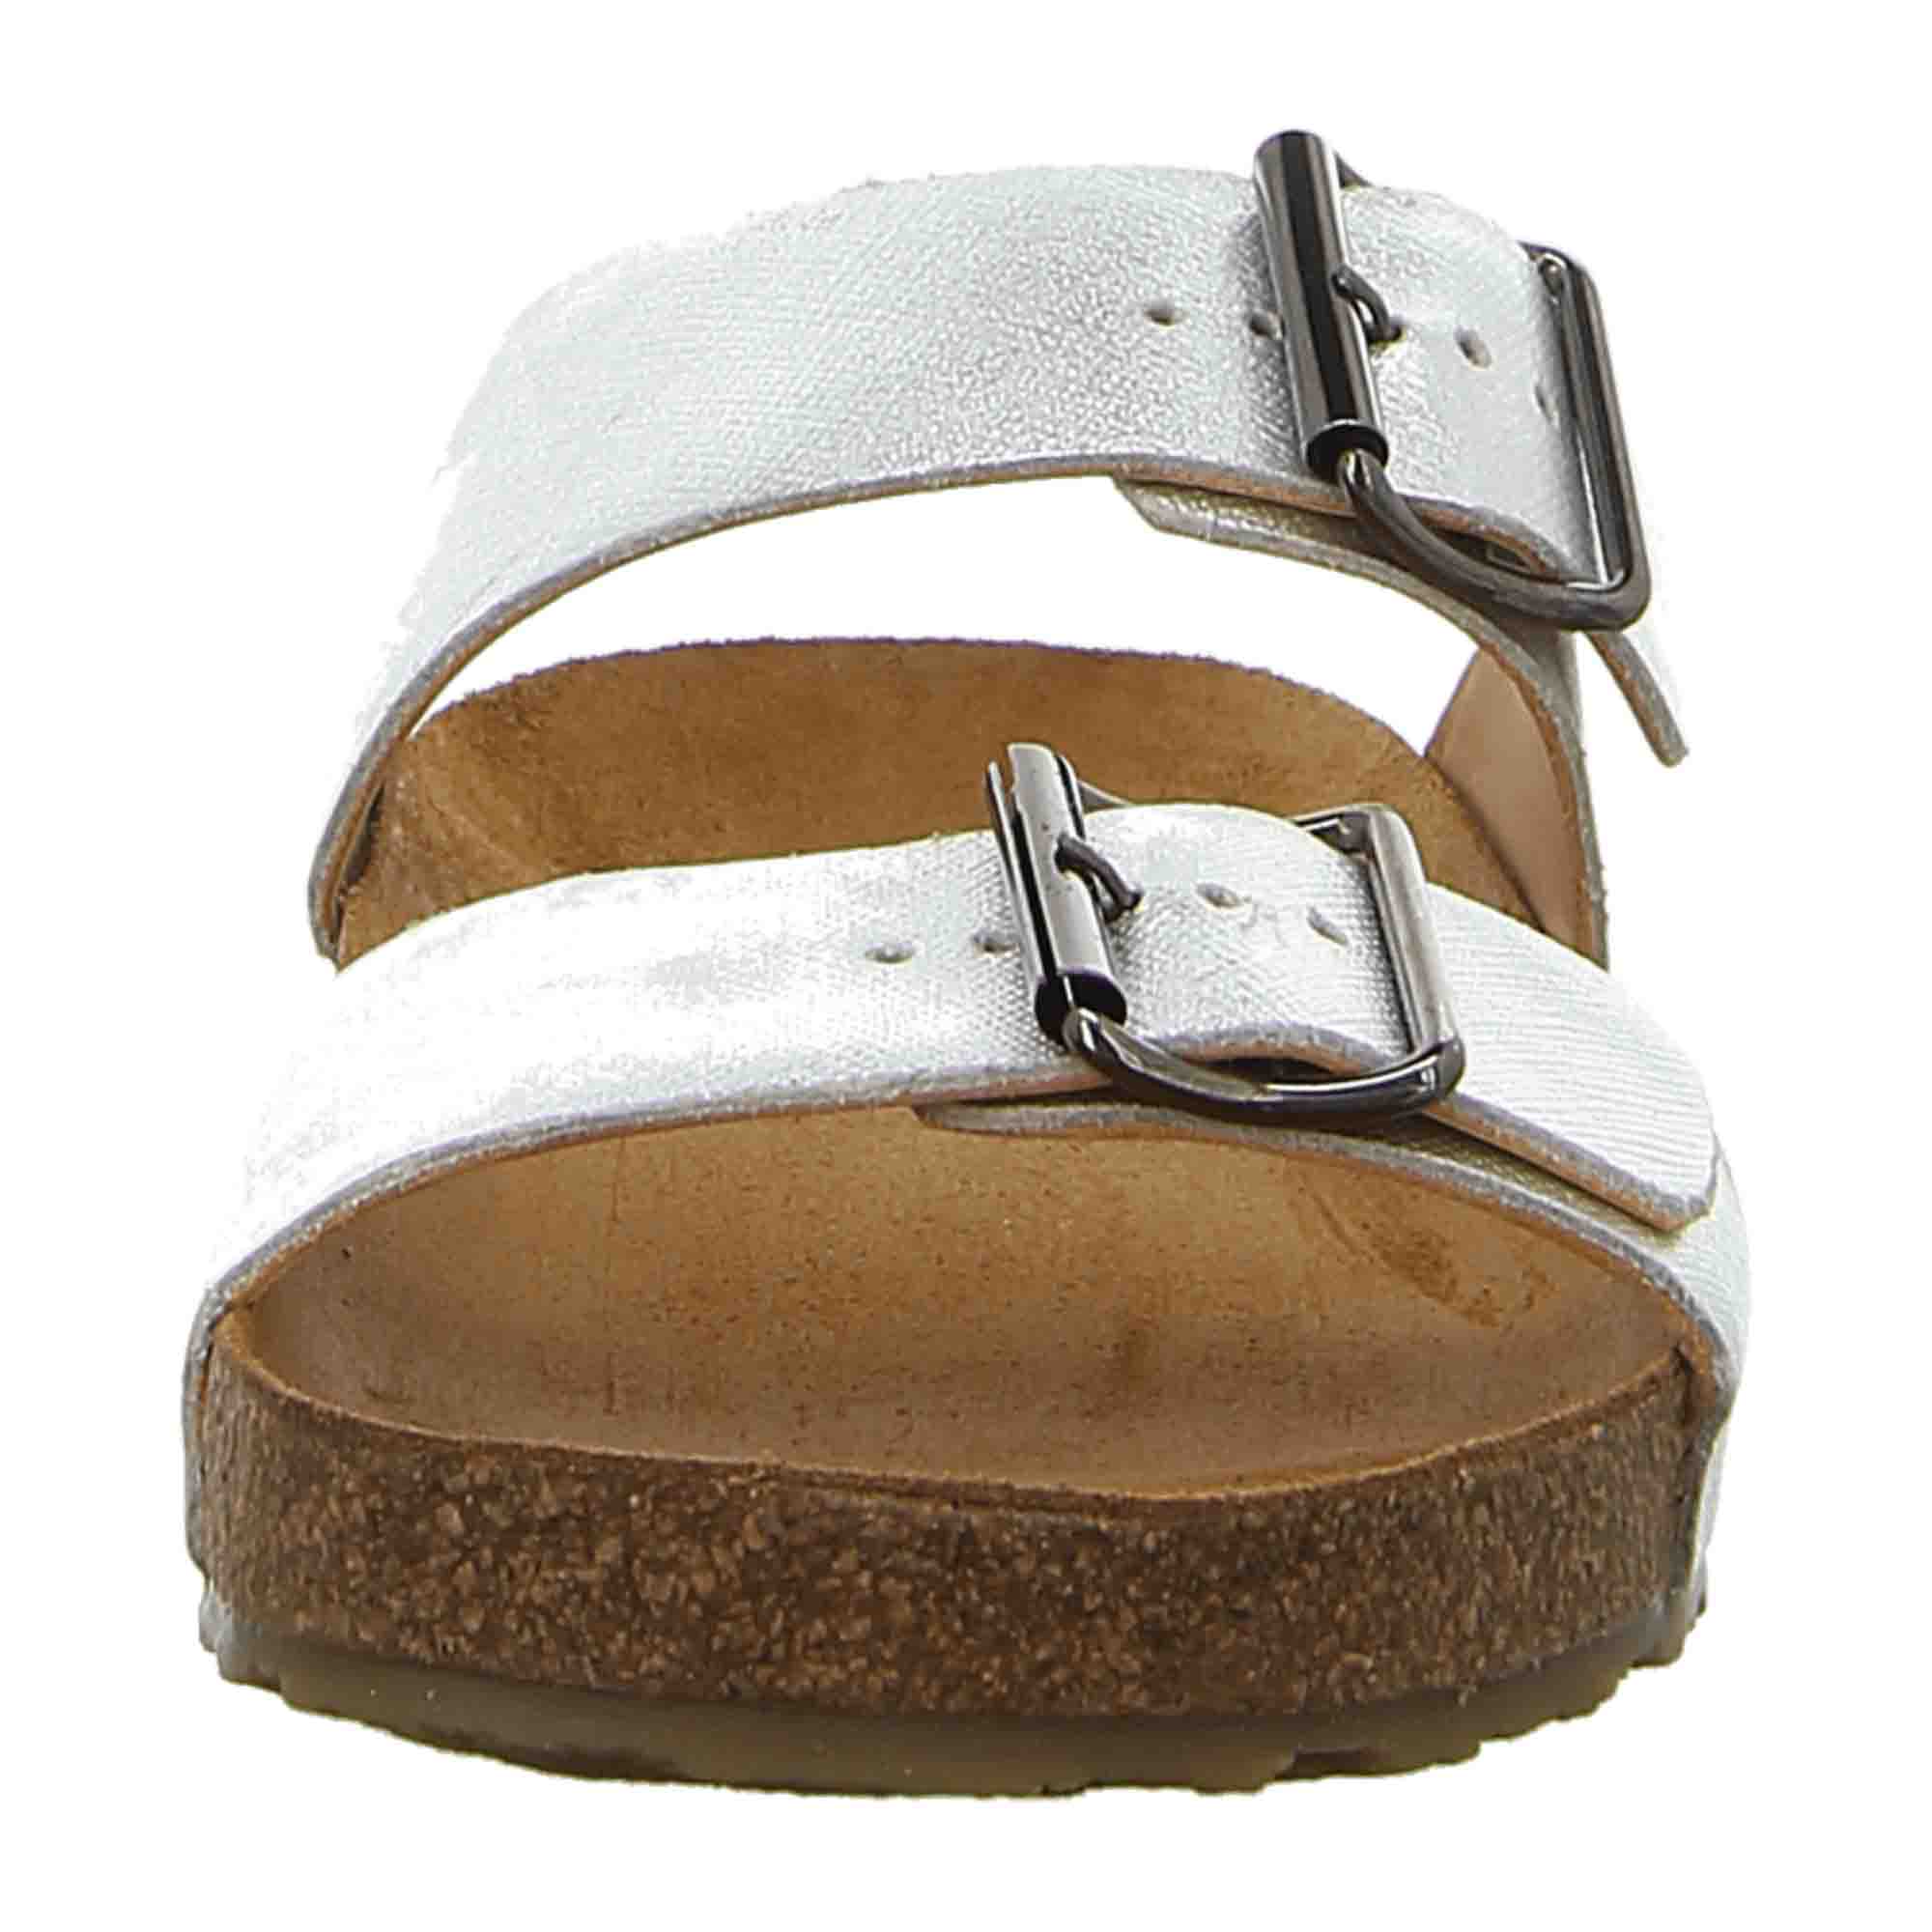 Haflinger Bio Andrea Women's Silver Sandals - Eco-Friendly, Stylish Comfort